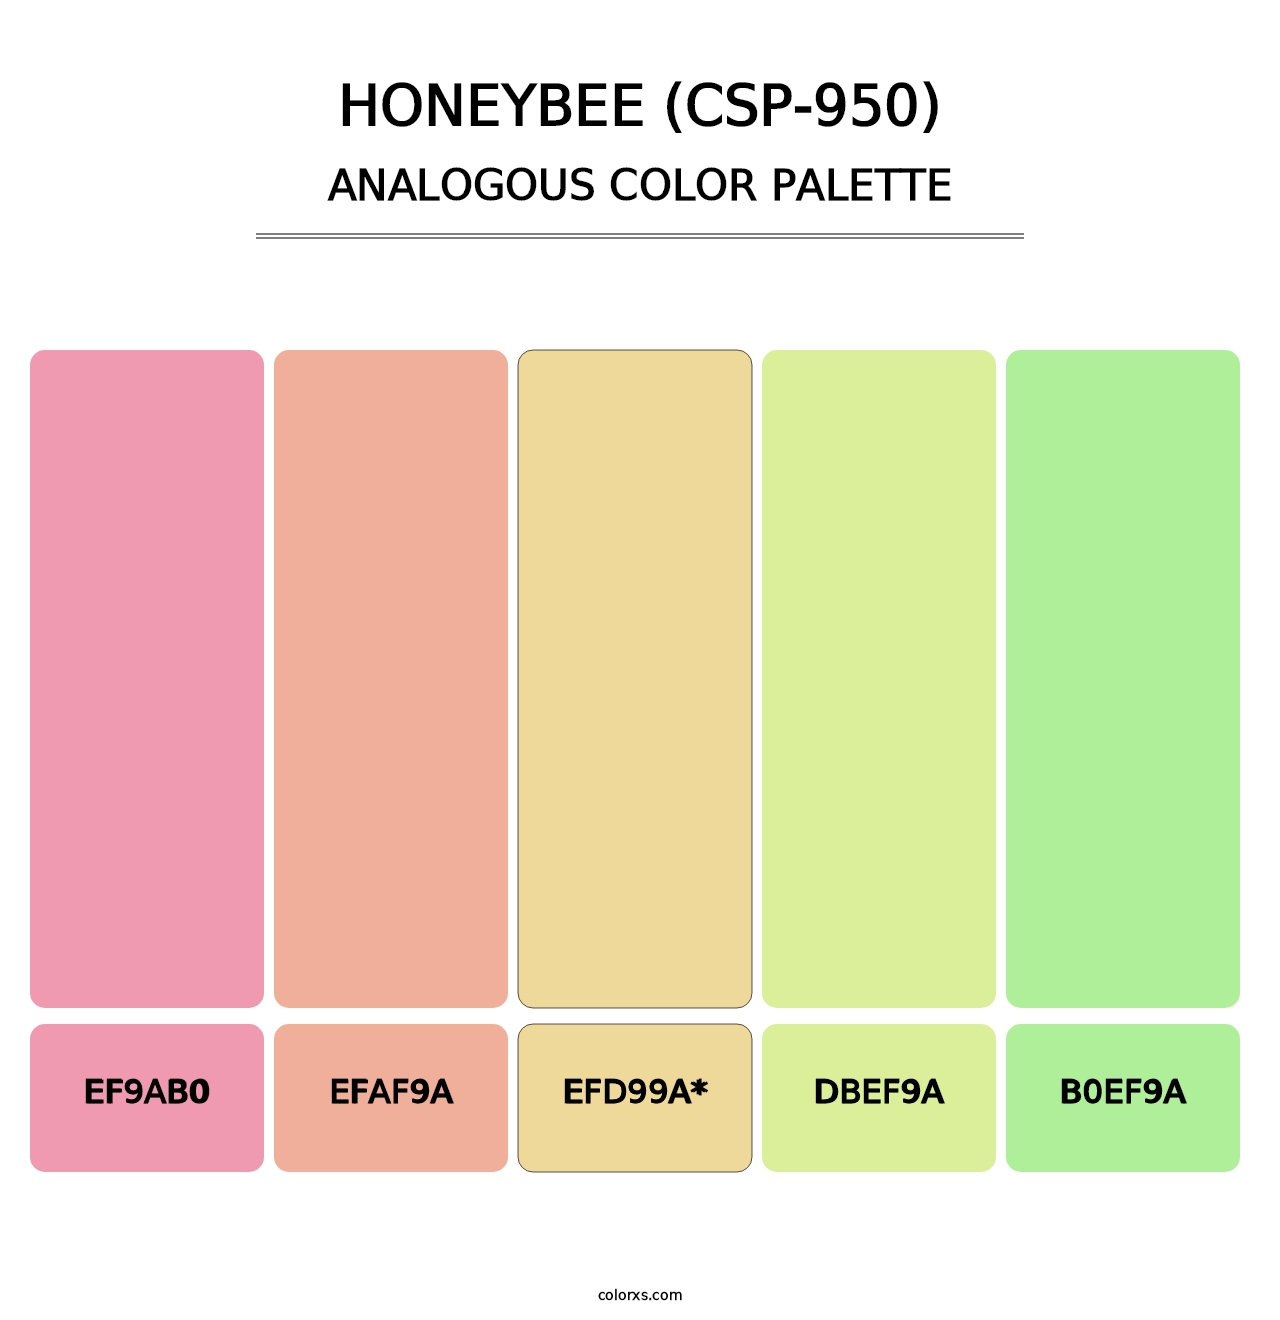 Honeybee (CSP-950) - Analogous Color Palette